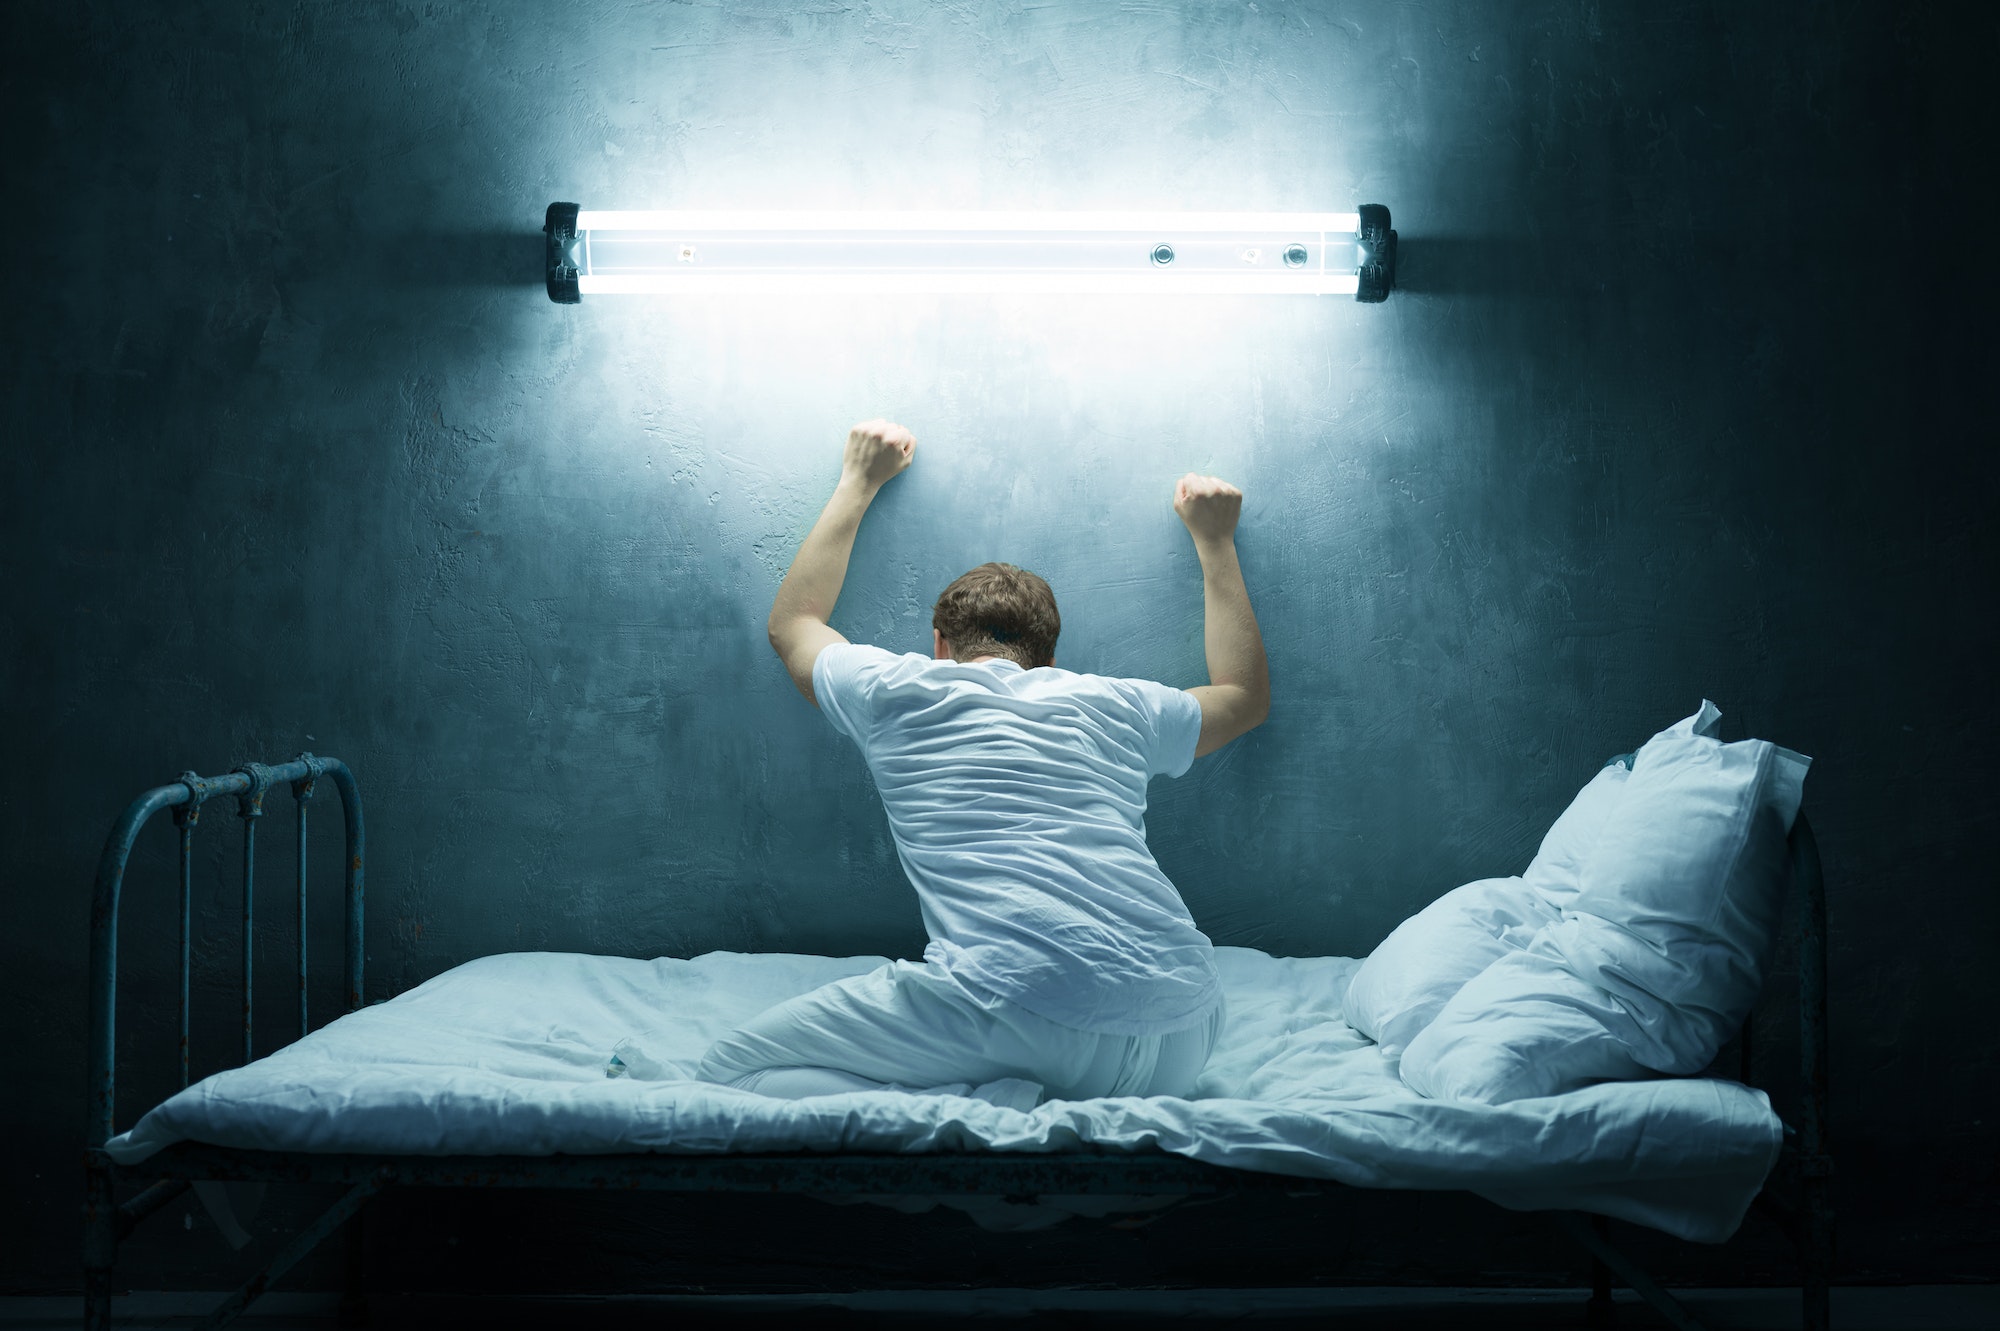 Psycho man alone in bed, dark room, hospital